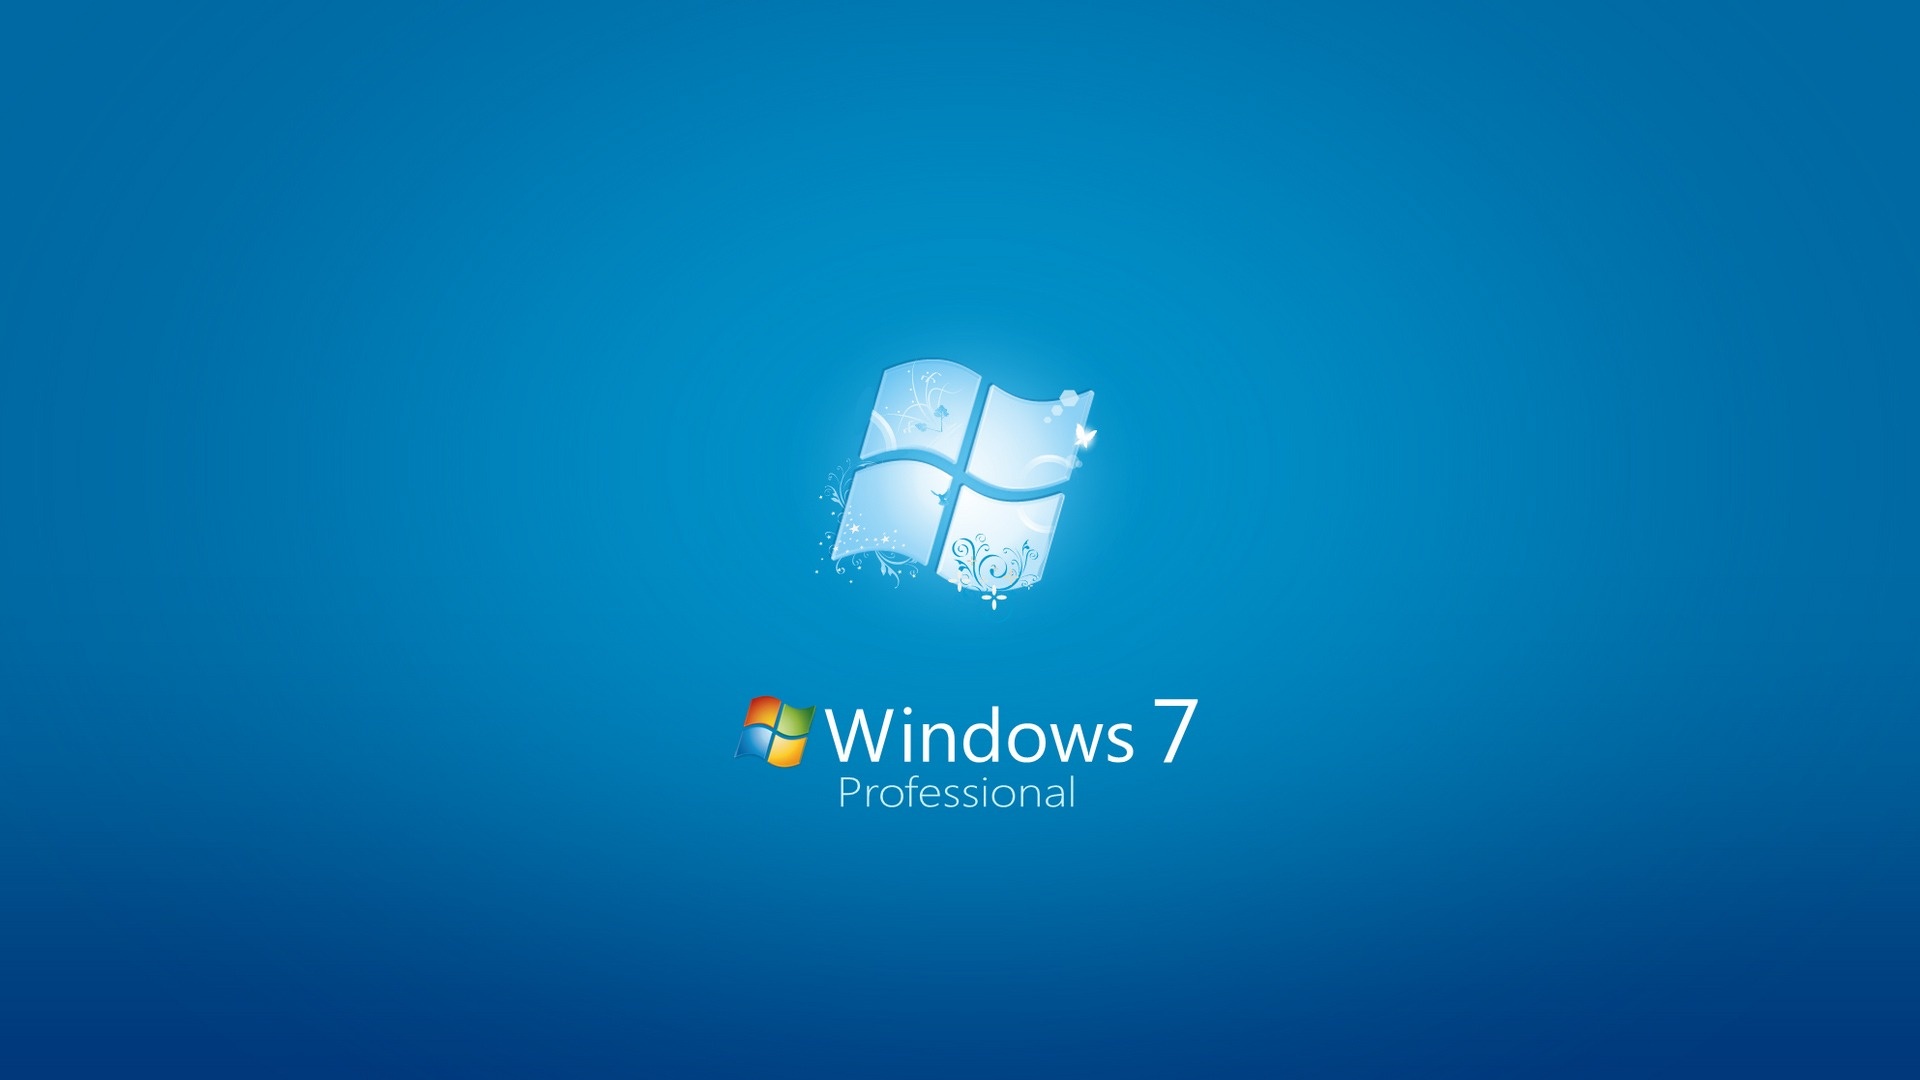 Nickname Awesome Windows Professional HD Wallpaper Resolotion